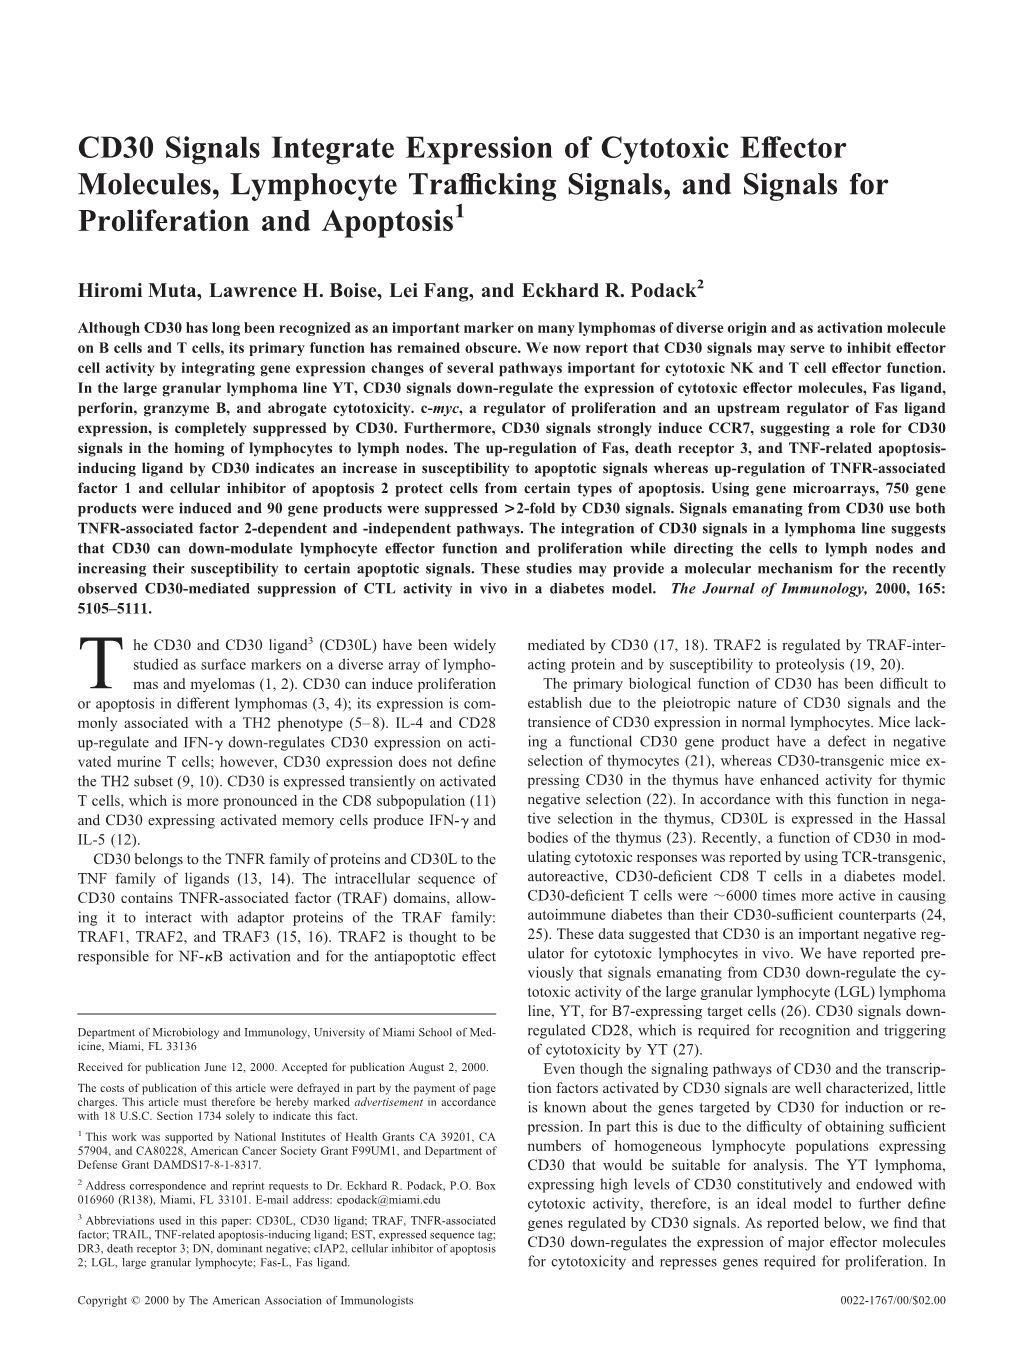 Proliferation and Apoptosis Trafficking Signals, and Signals for Cytotoxic